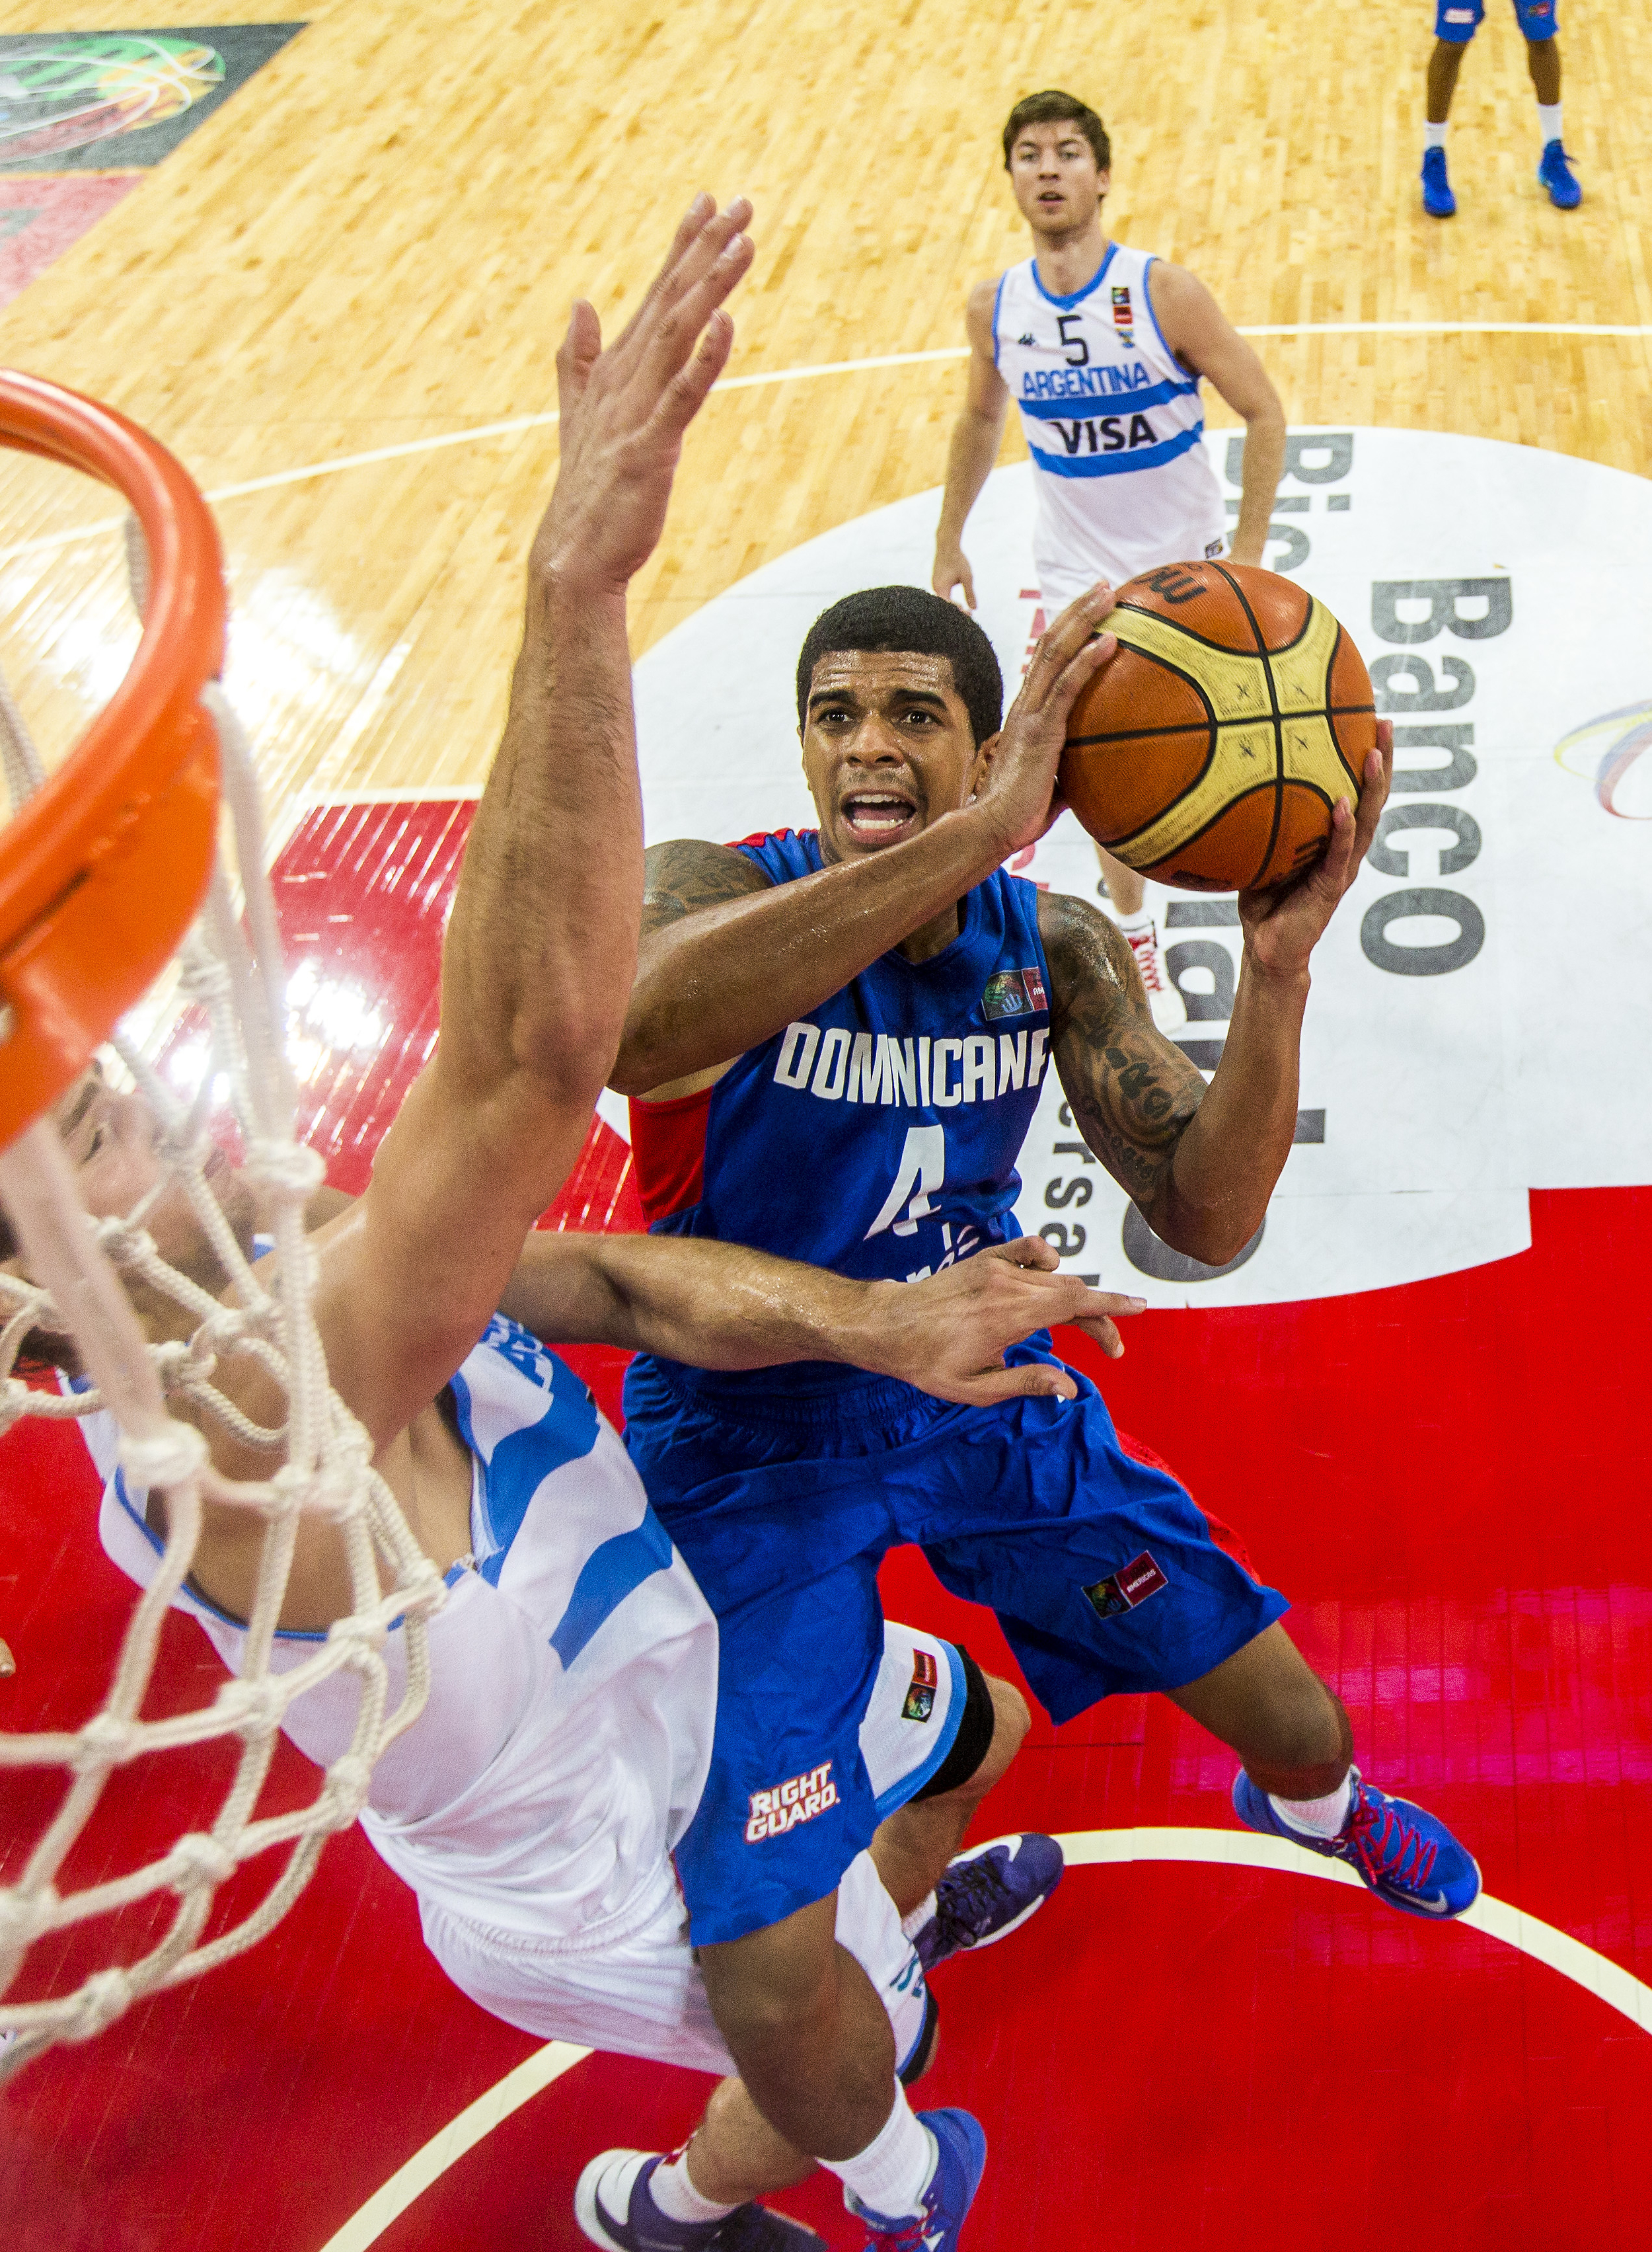 Edgar Sosa (Dominican Republic) Attacks the Basket